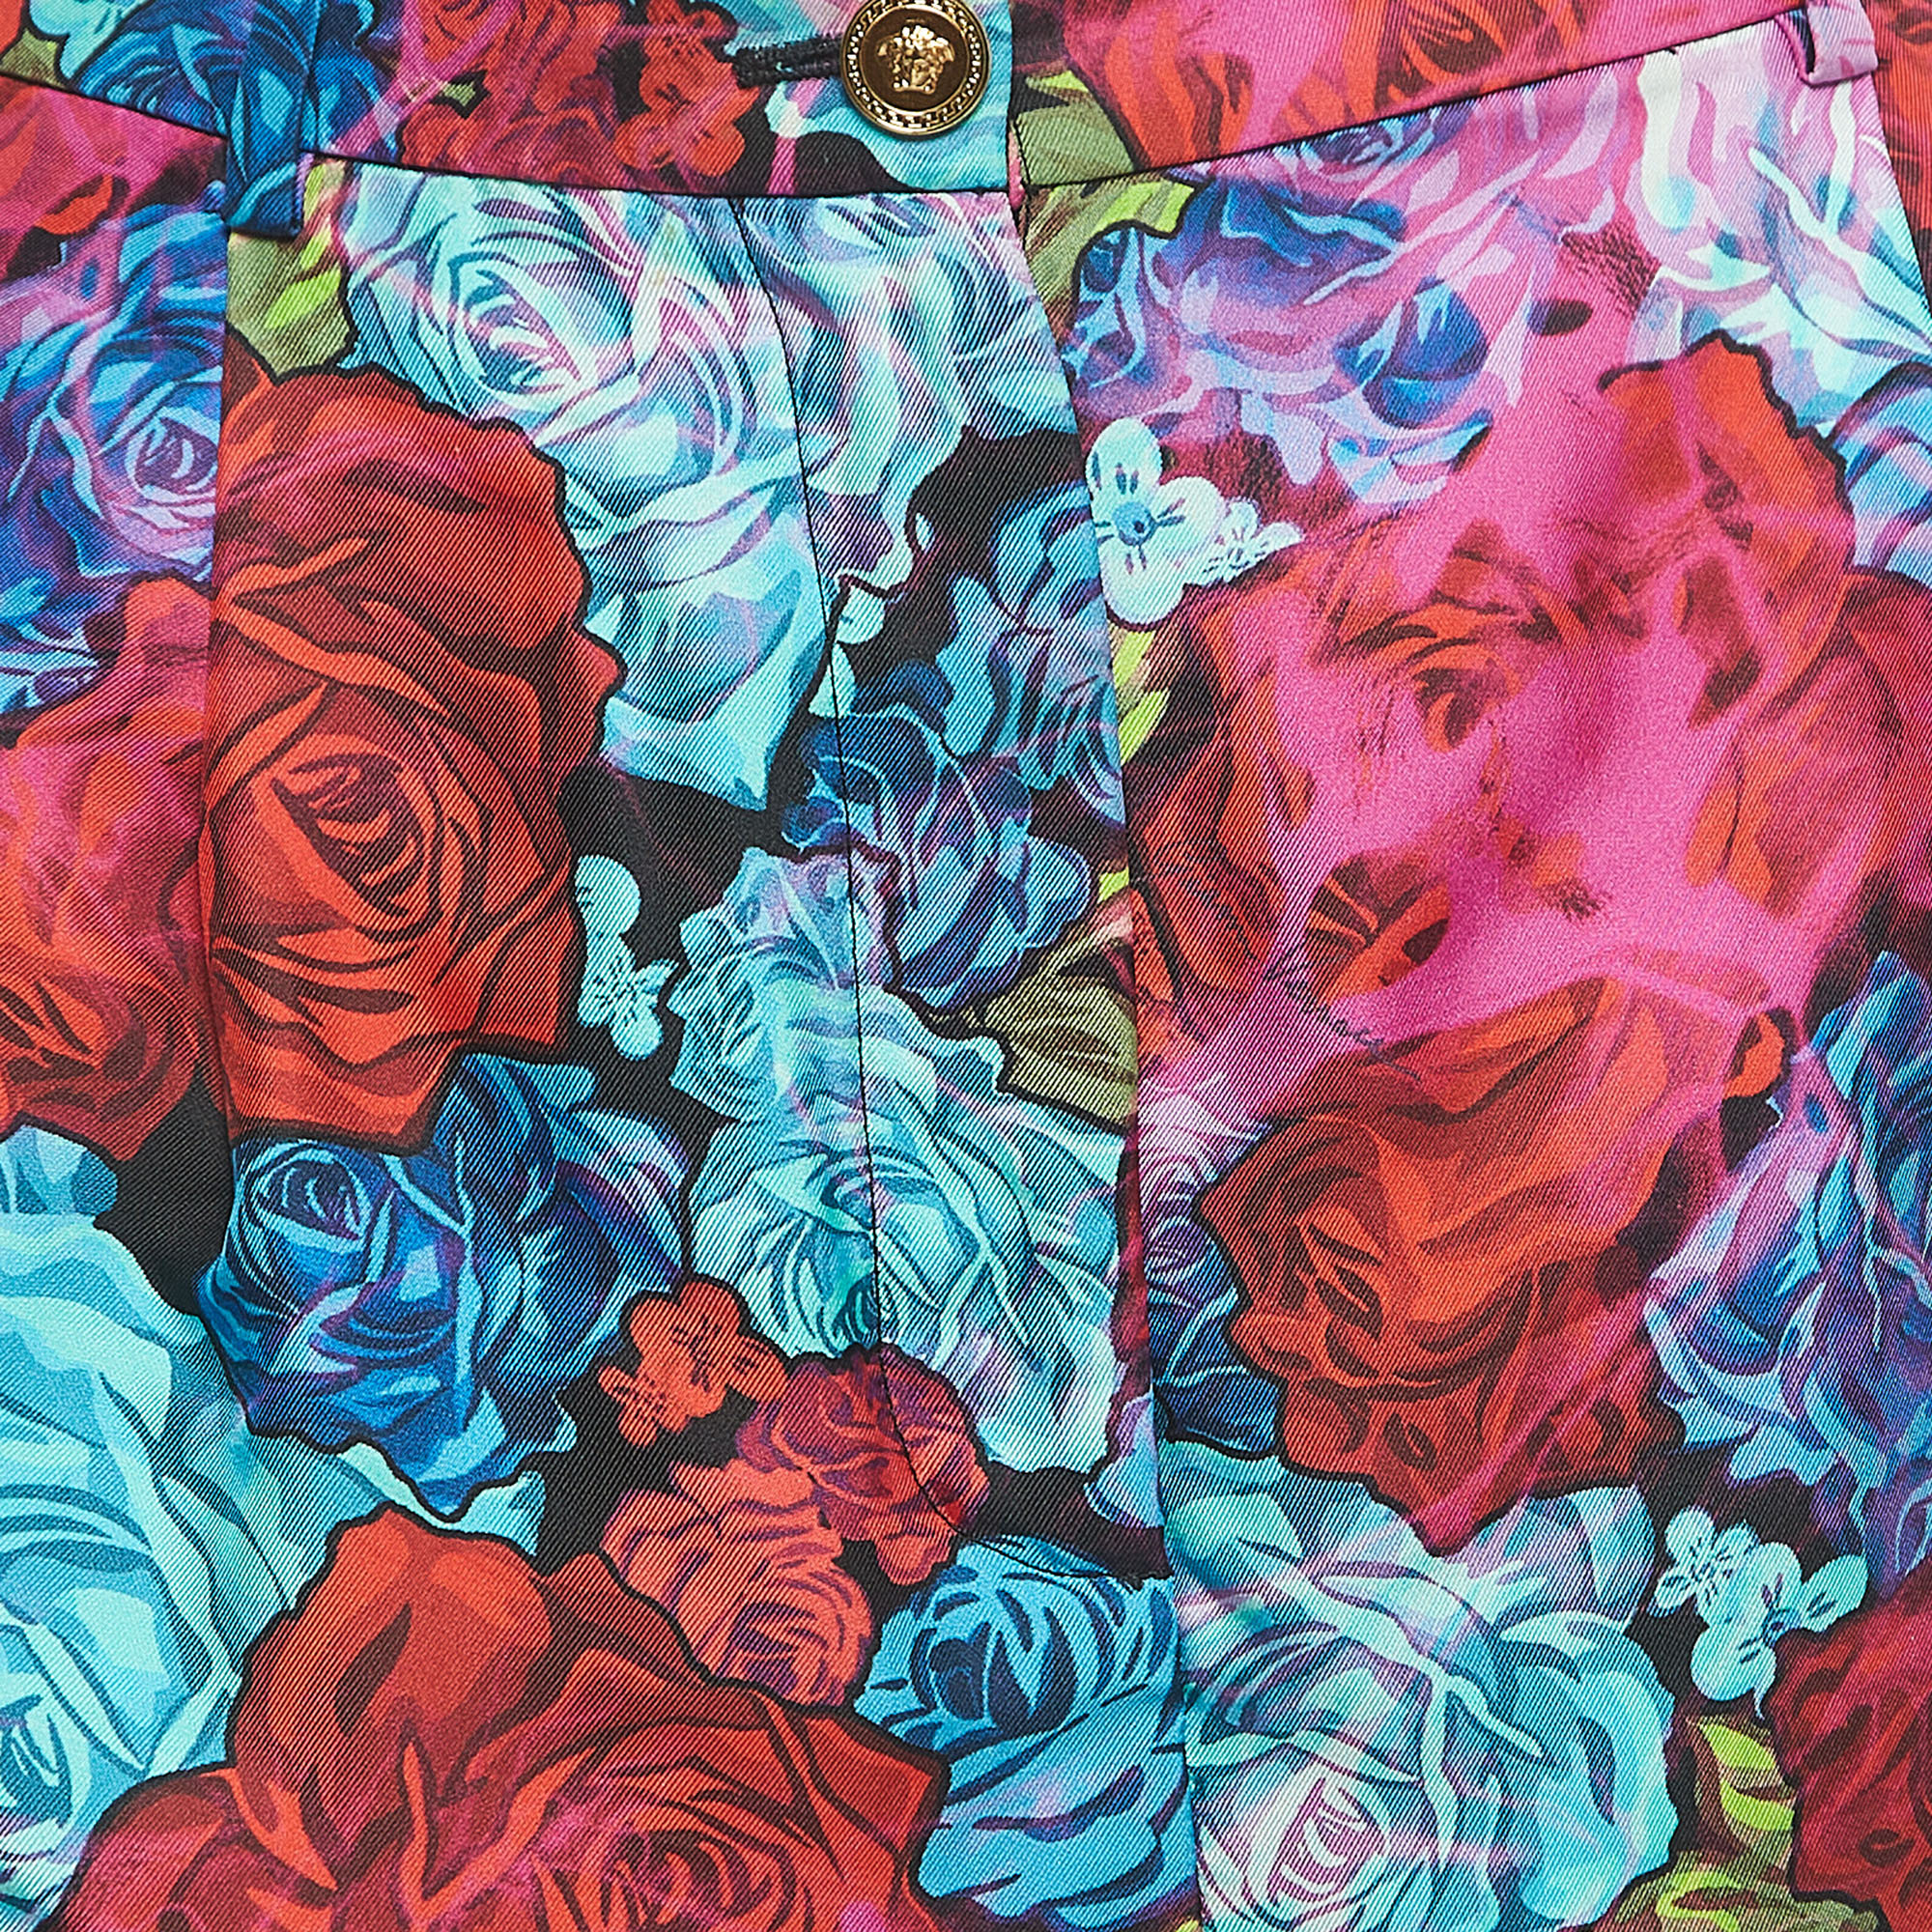 Versace Multicolor Rose Printed Silk Shorts M